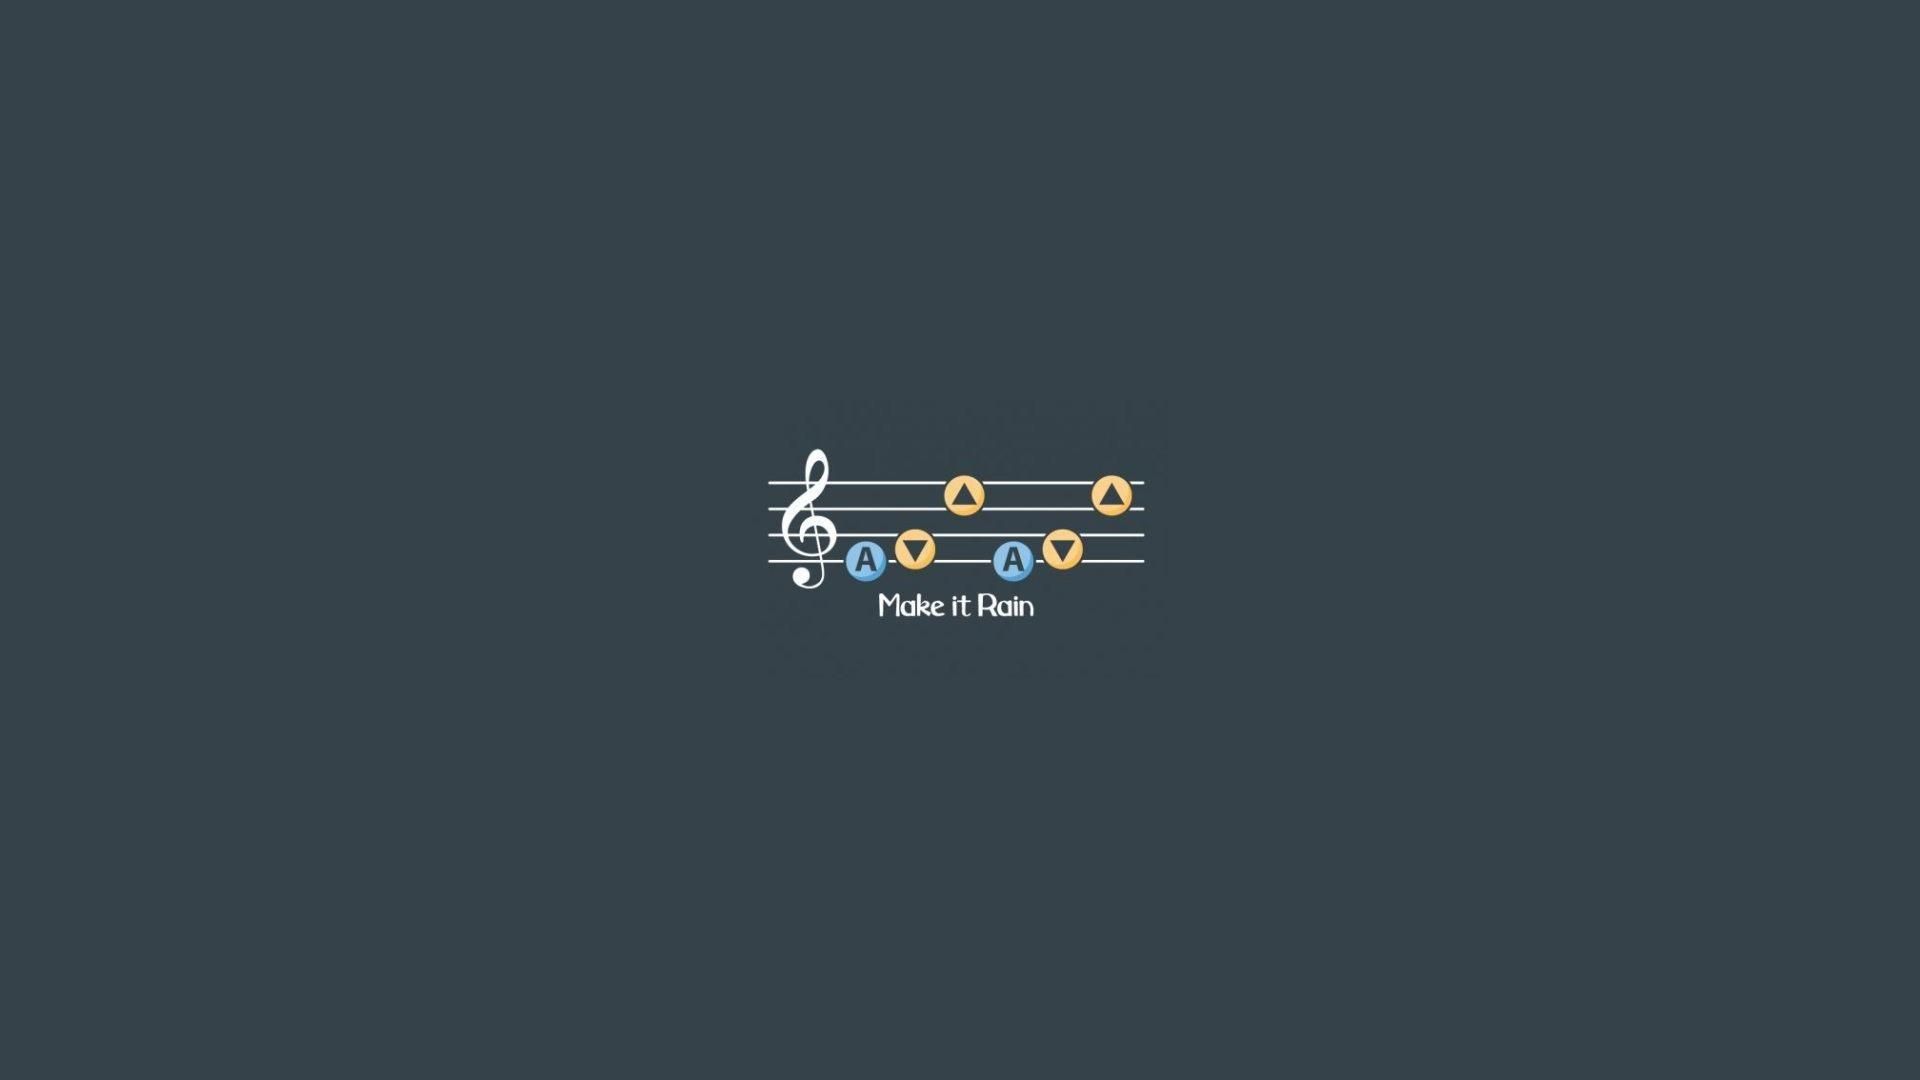 Music Aesthetic Desktop Wallpapers - Top Free Music Aesthetic Desktop